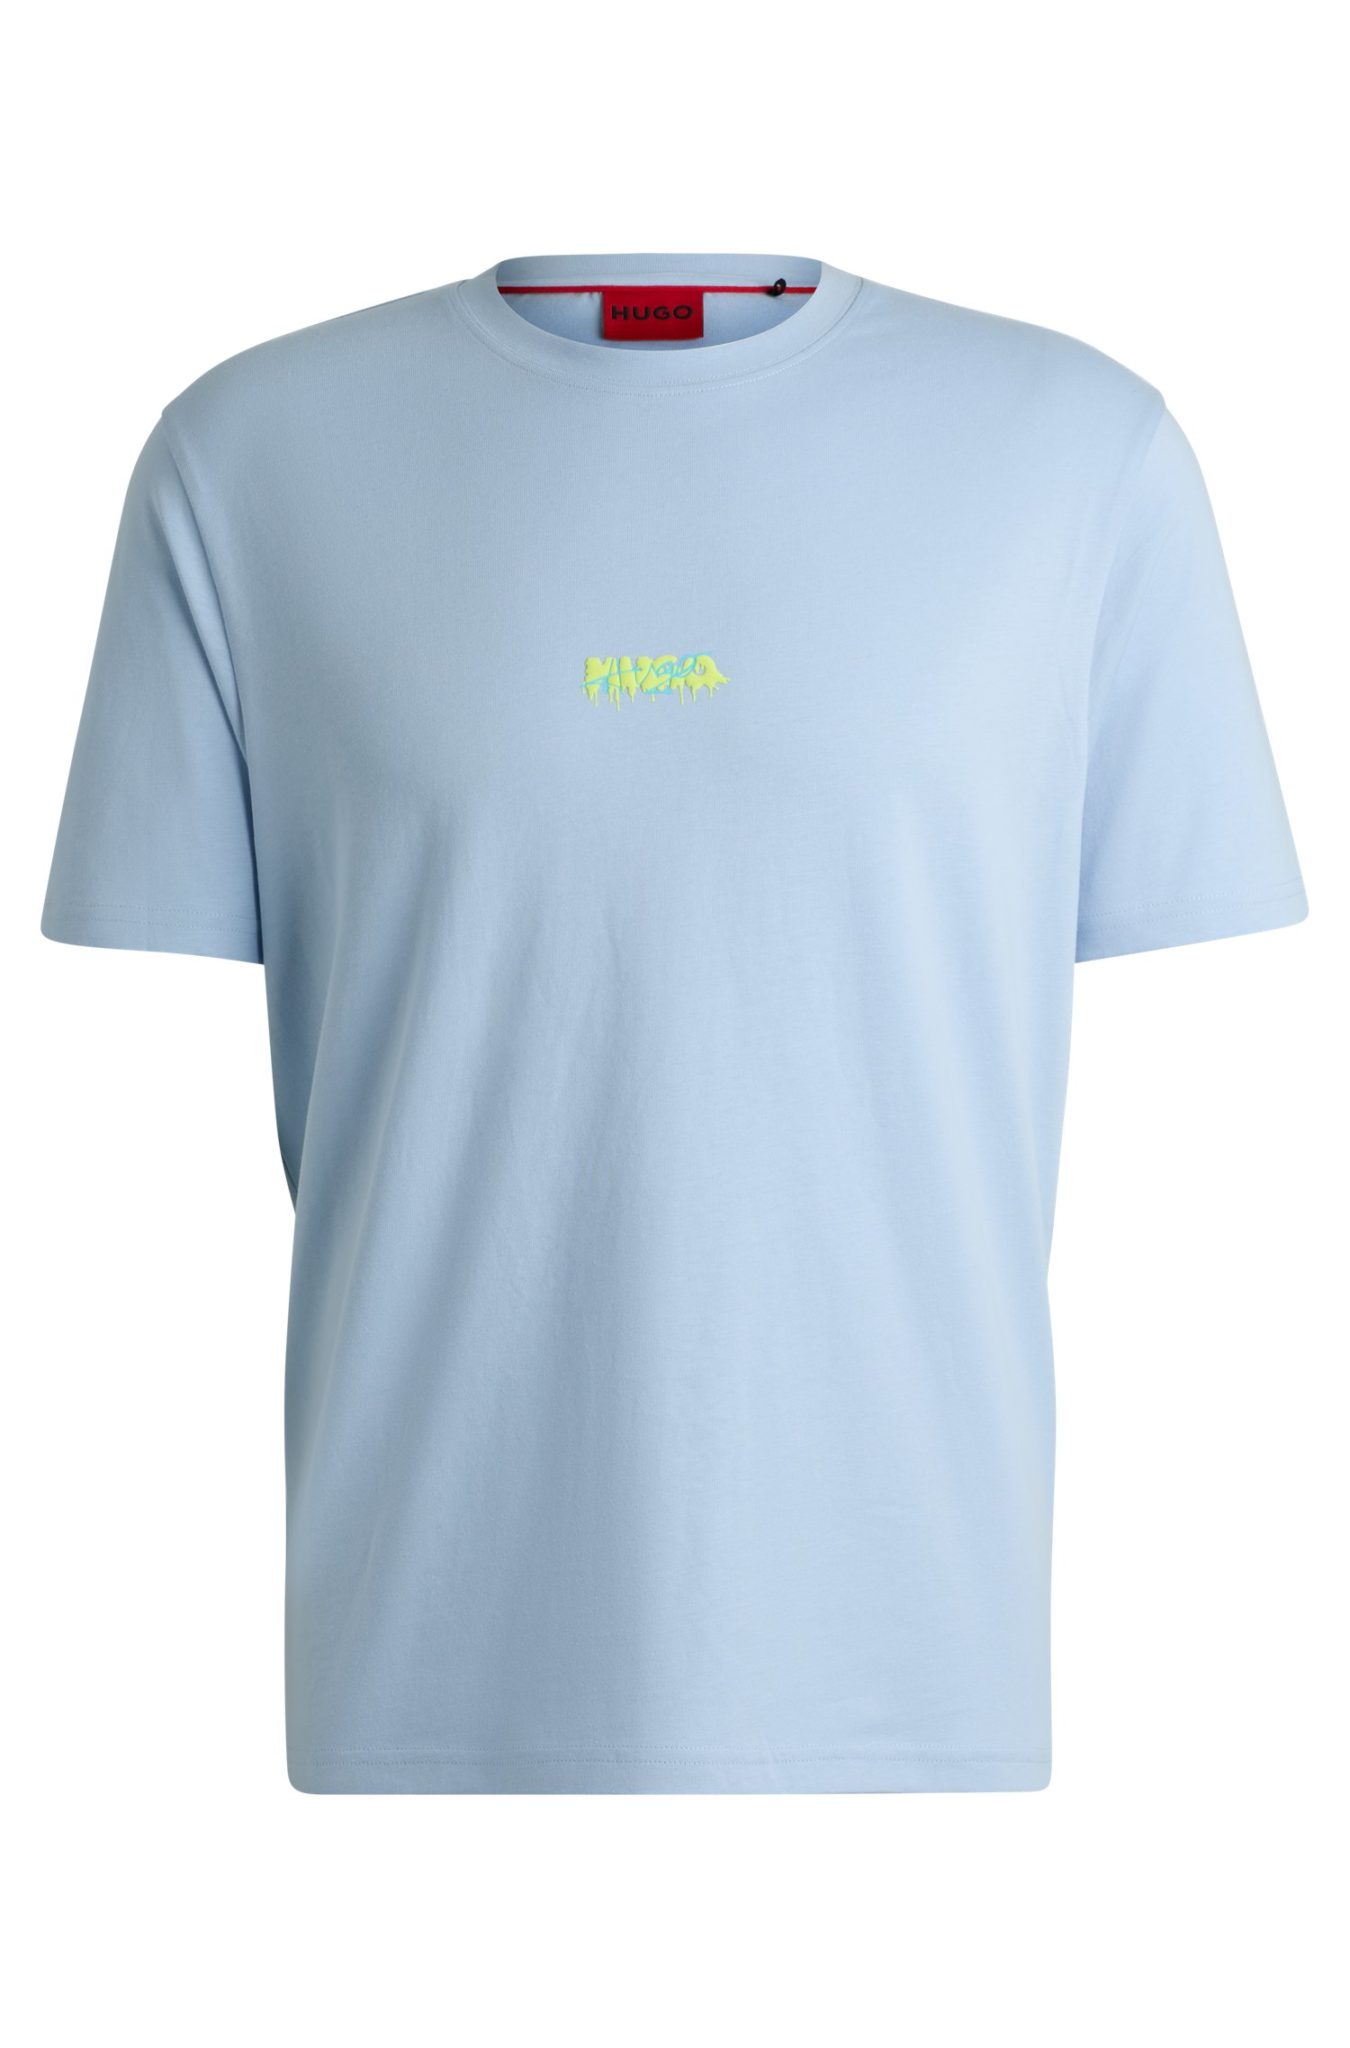 Hugo Boss T-shirt Relaxed Fit en jersey de coton à double logo